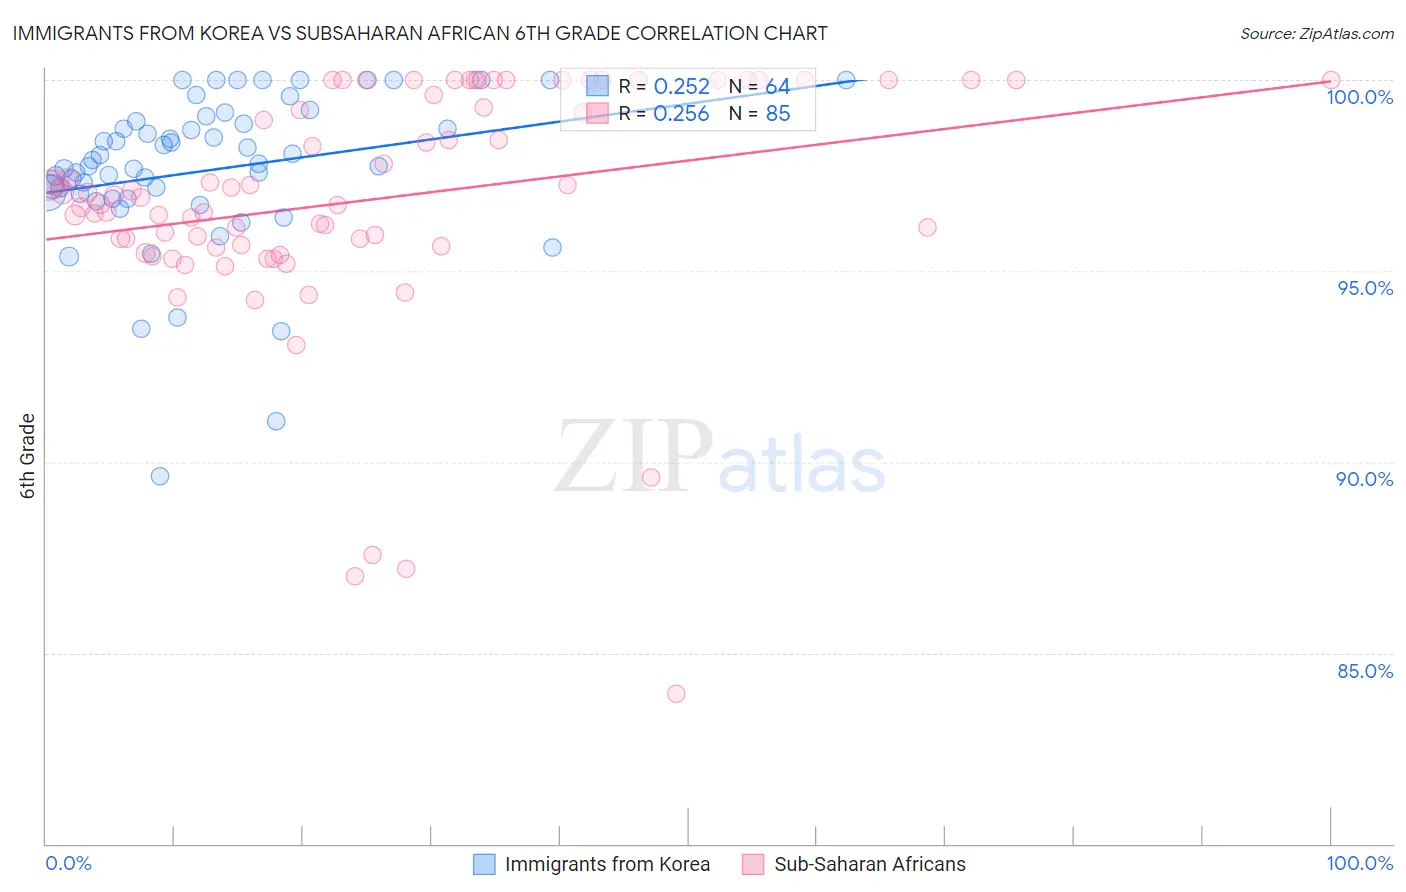 Immigrants from Korea vs Subsaharan African 6th Grade